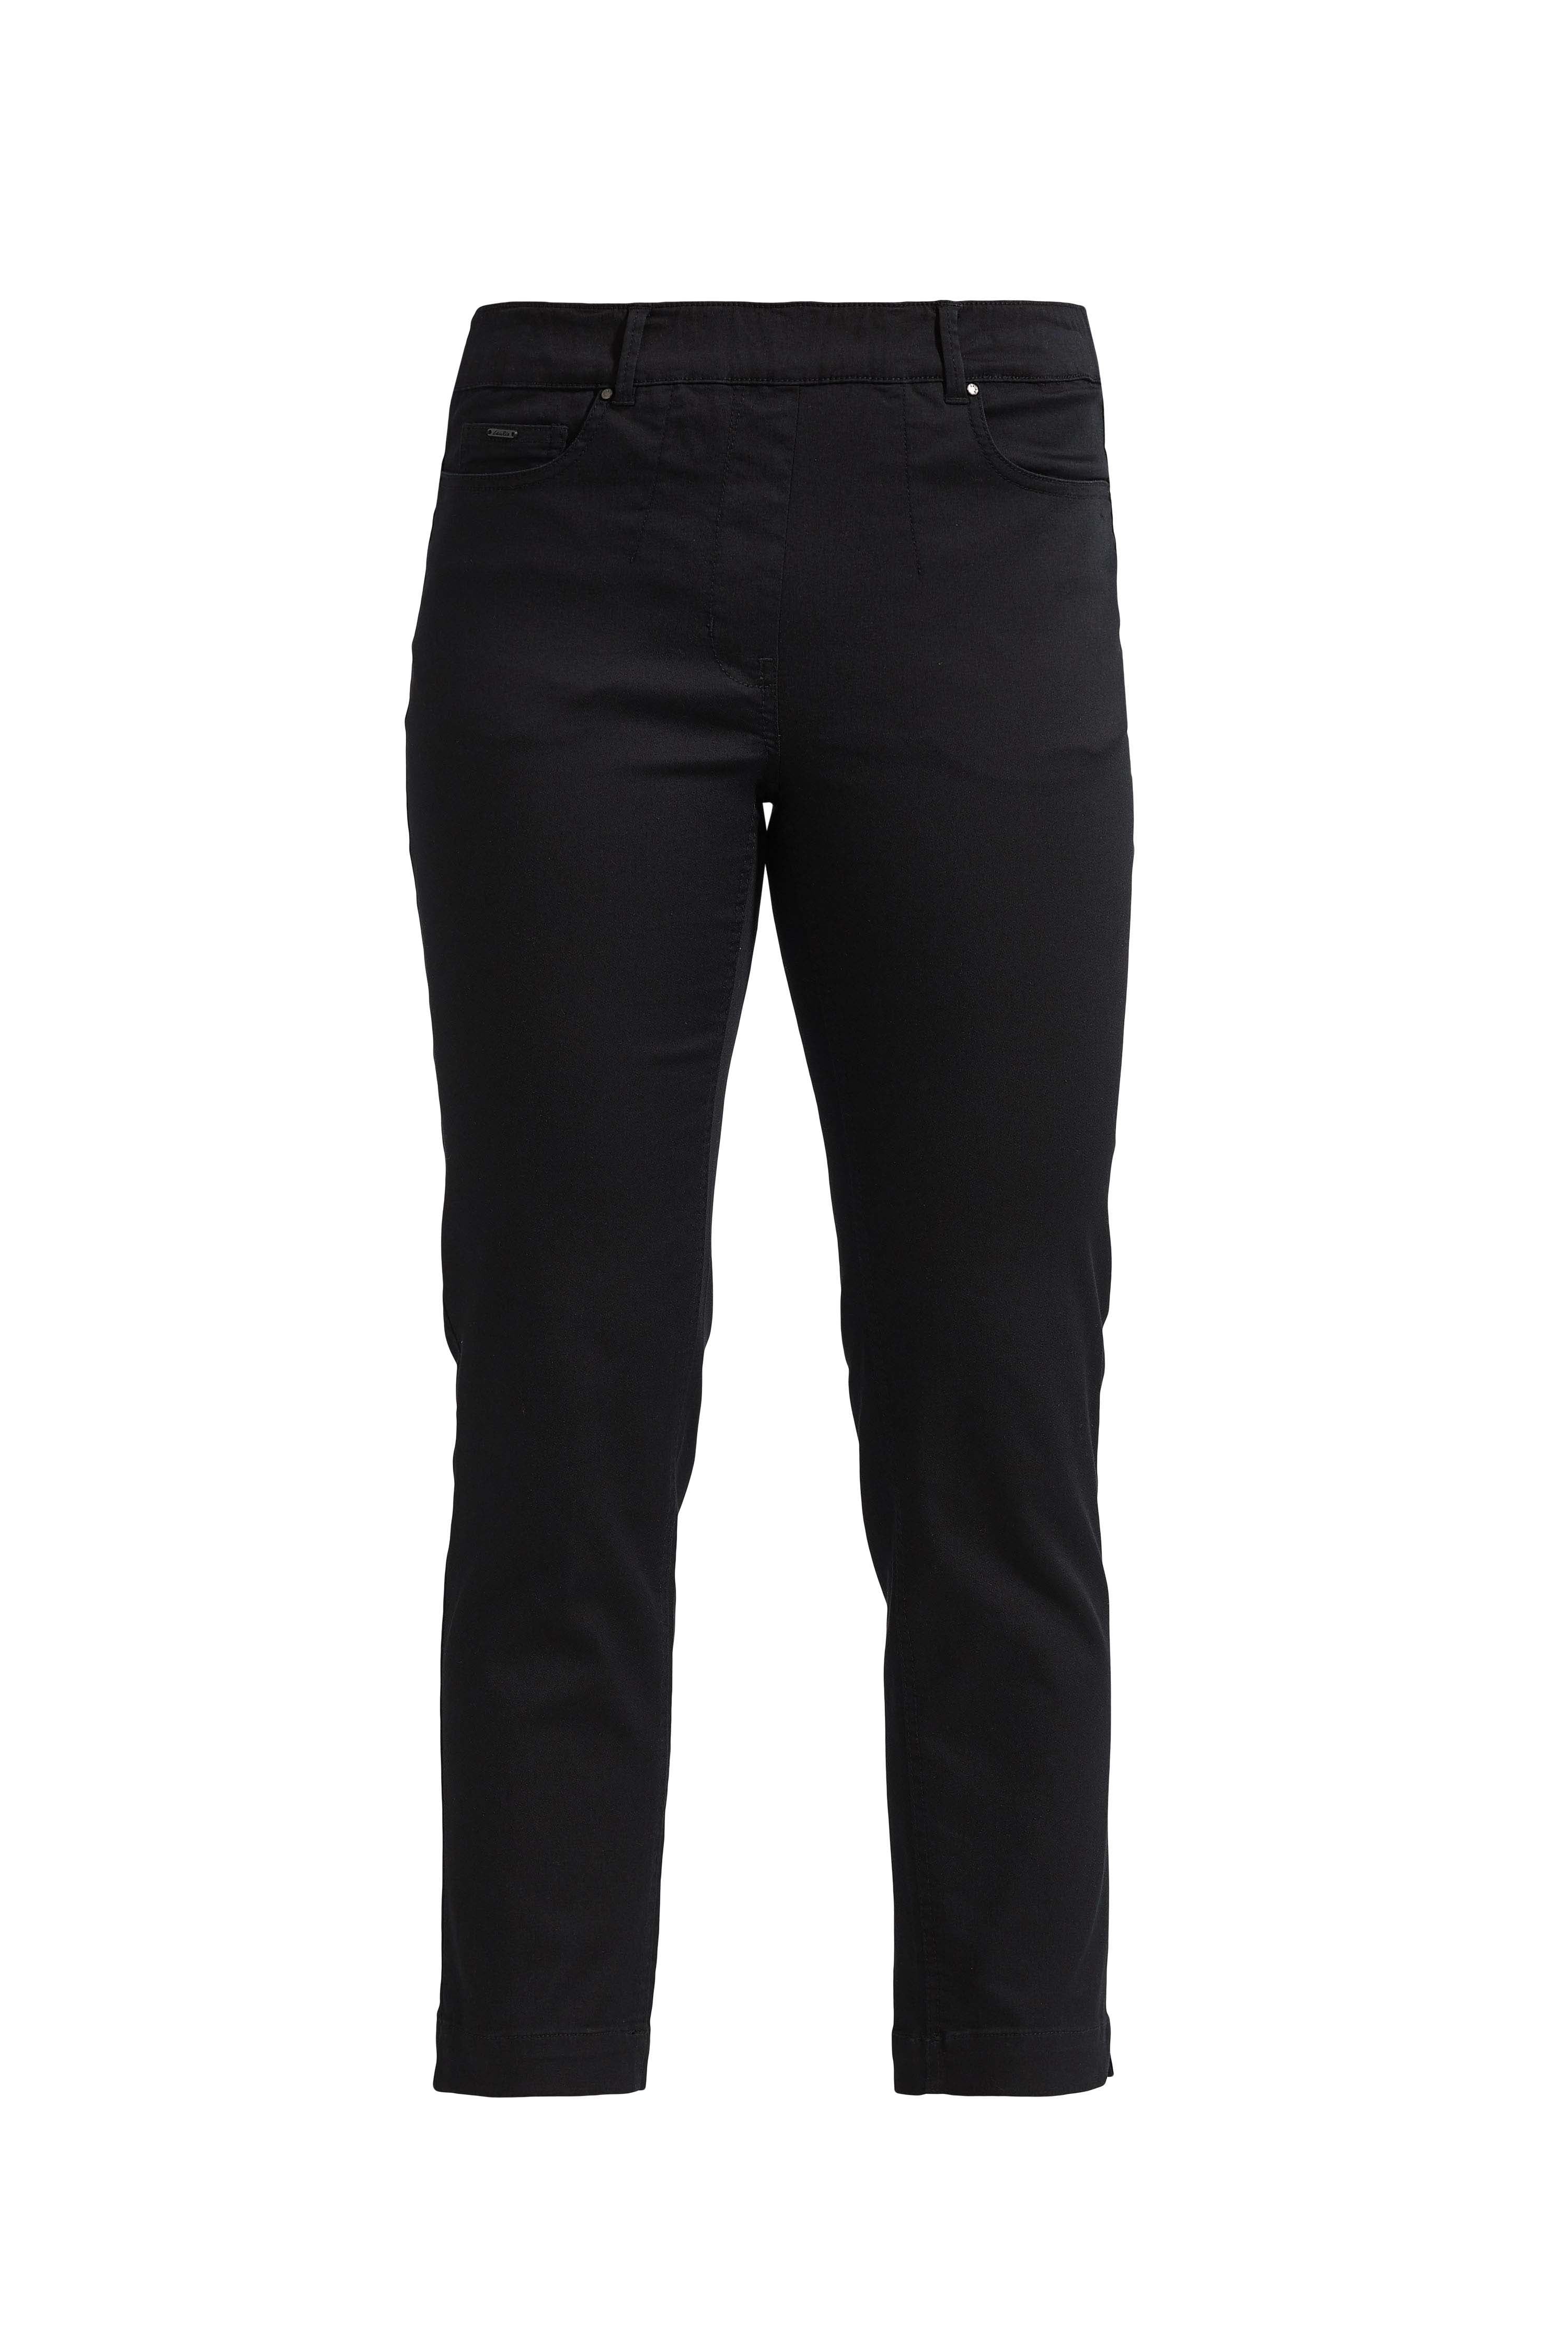 LAURIE Hannah Regular - Extra Short Length Trousers REGULAR 99100 Black